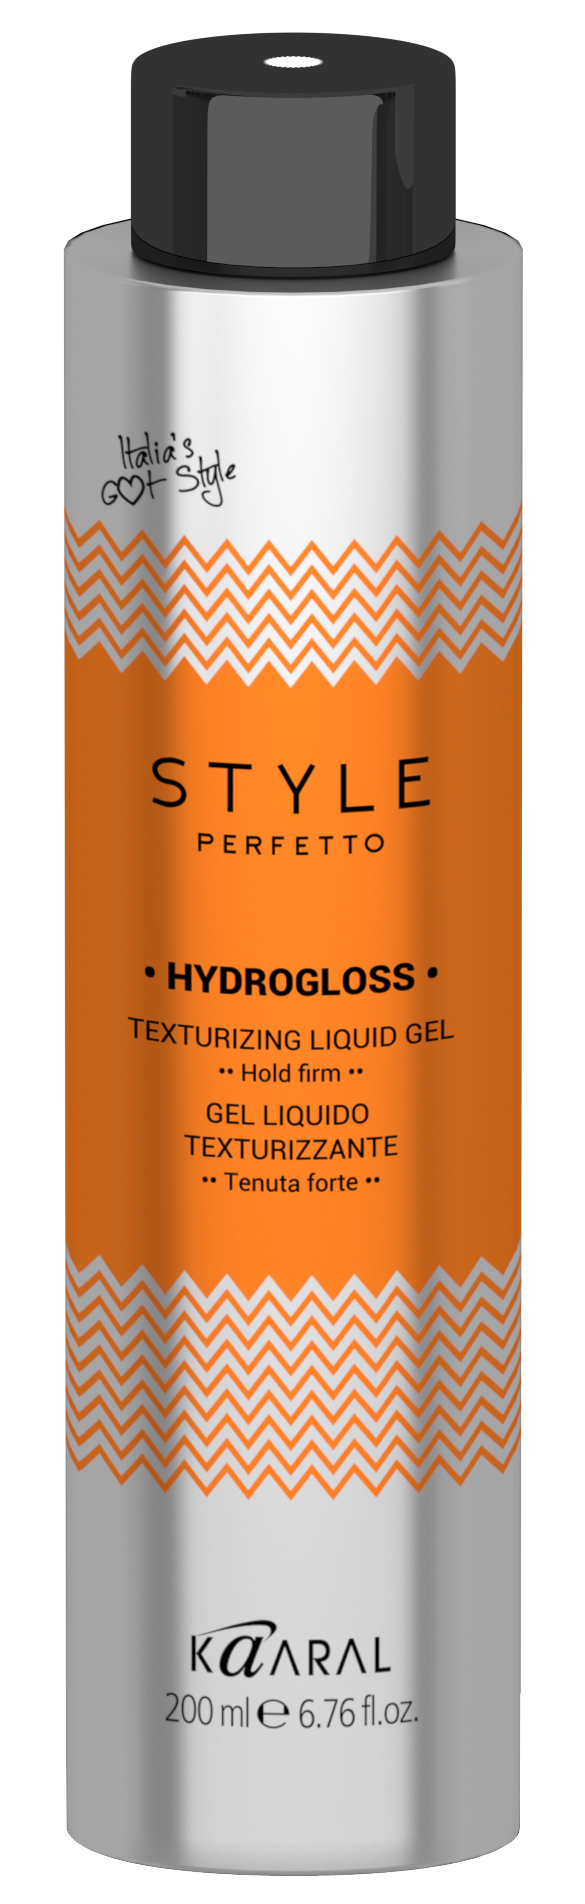 Style Perfetto Жидкий гель для текстурирования волос.200мл Hydrogloss Texturizing Liquid Gel. 